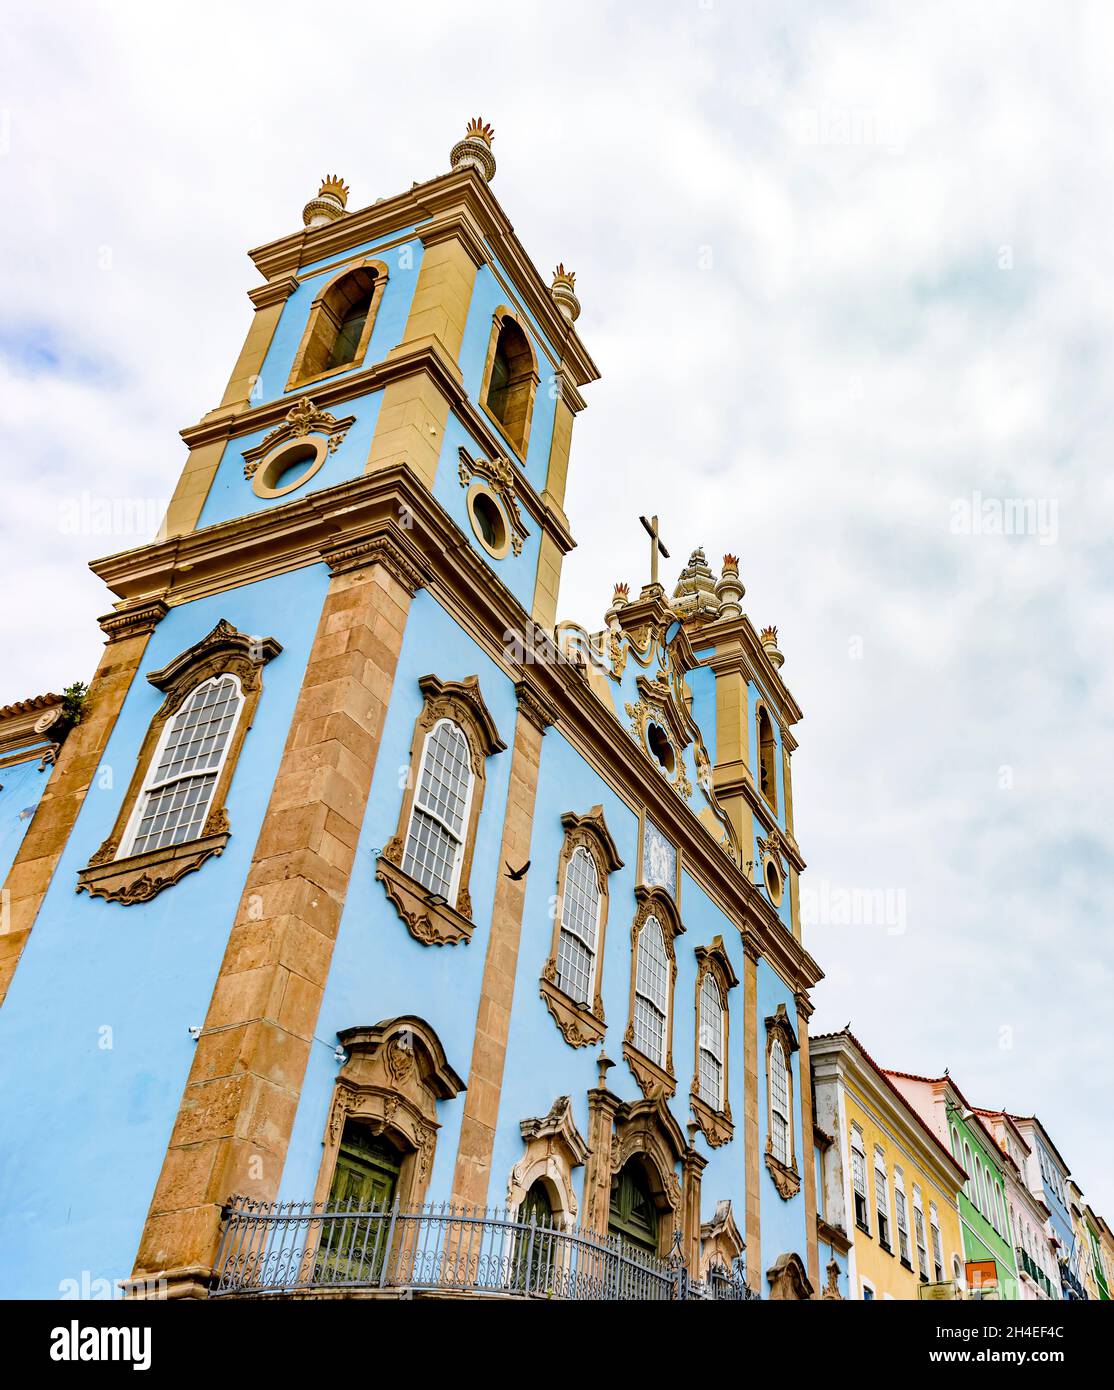 Perspective of the facade of a colorful historic church in the Pelourinho neighborhood in Salvador, Bahia Stock Photo